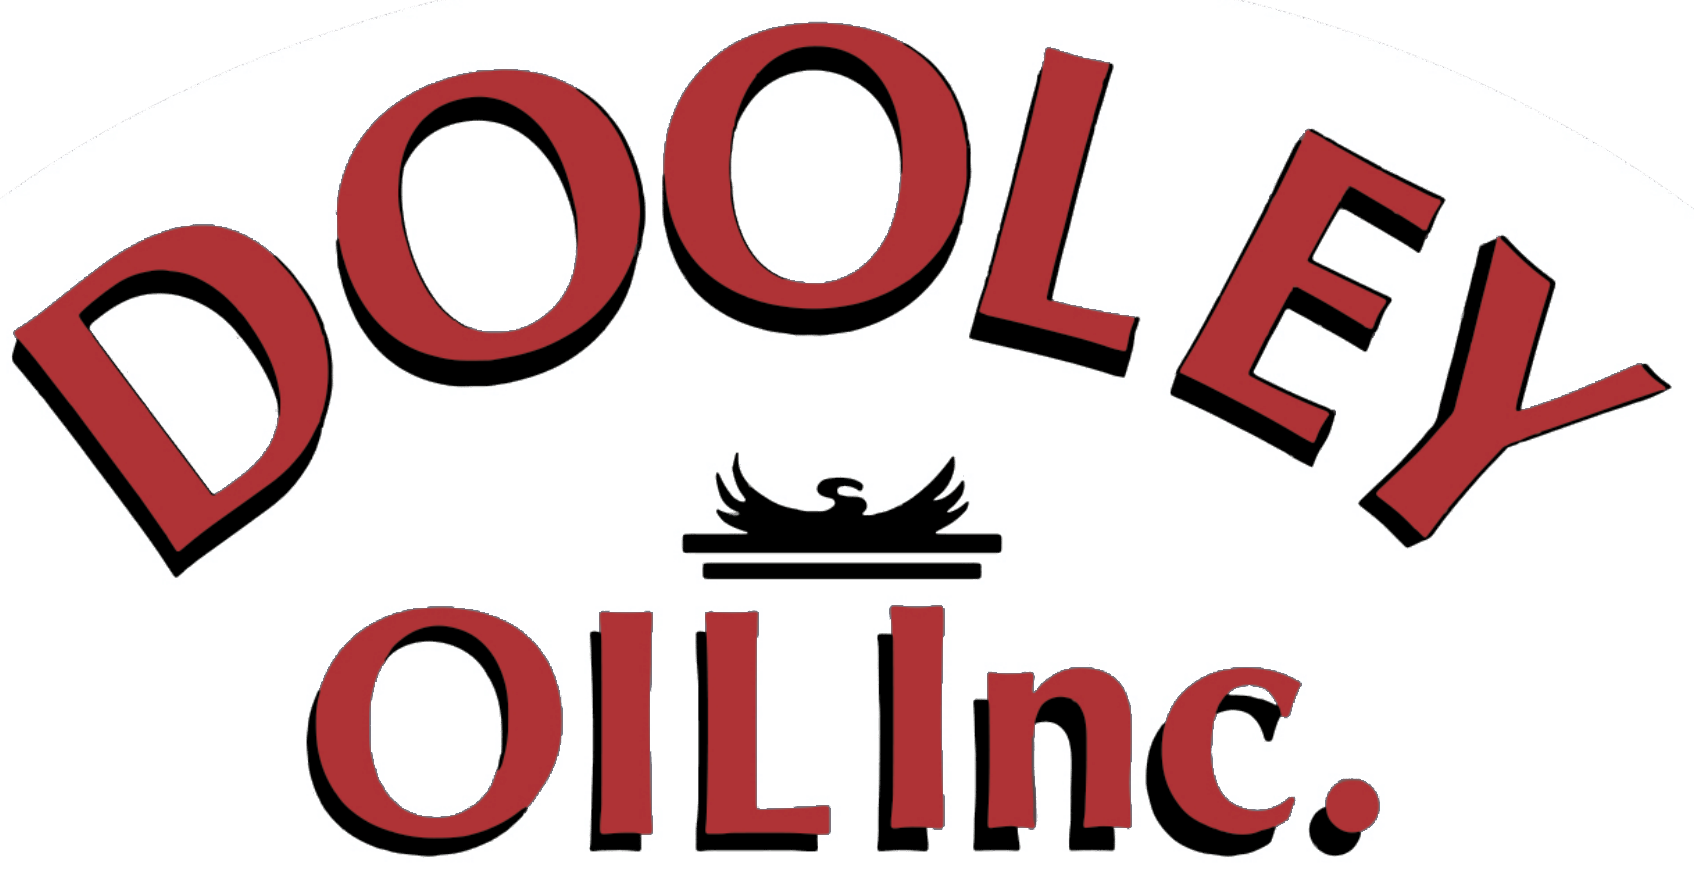 Dooley Oil Logo